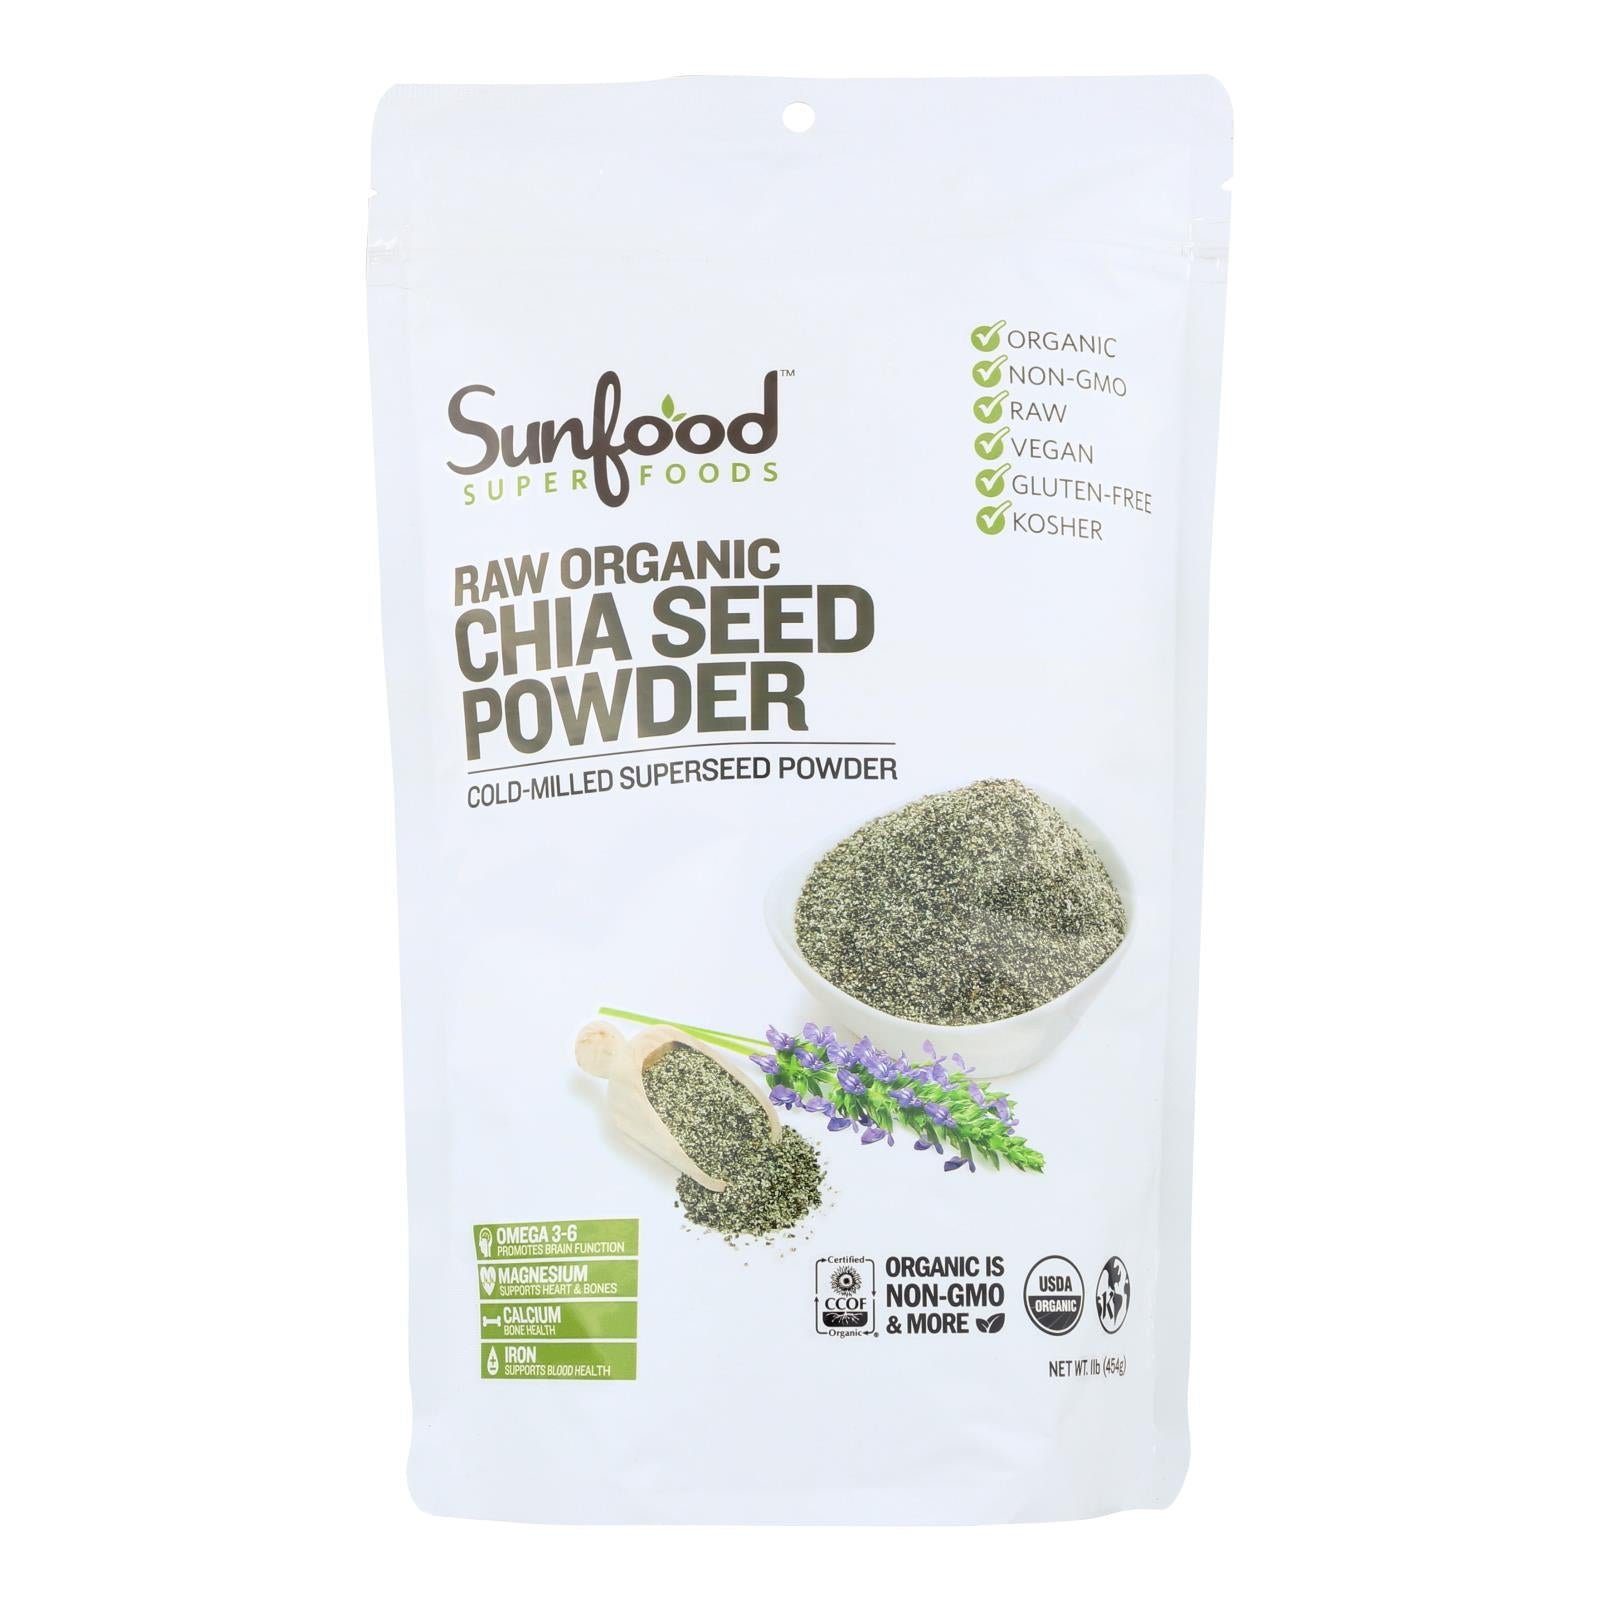 Sunfood Superfoods Raw Organic Chia Seed Powder - 1 Each - 1 Lb